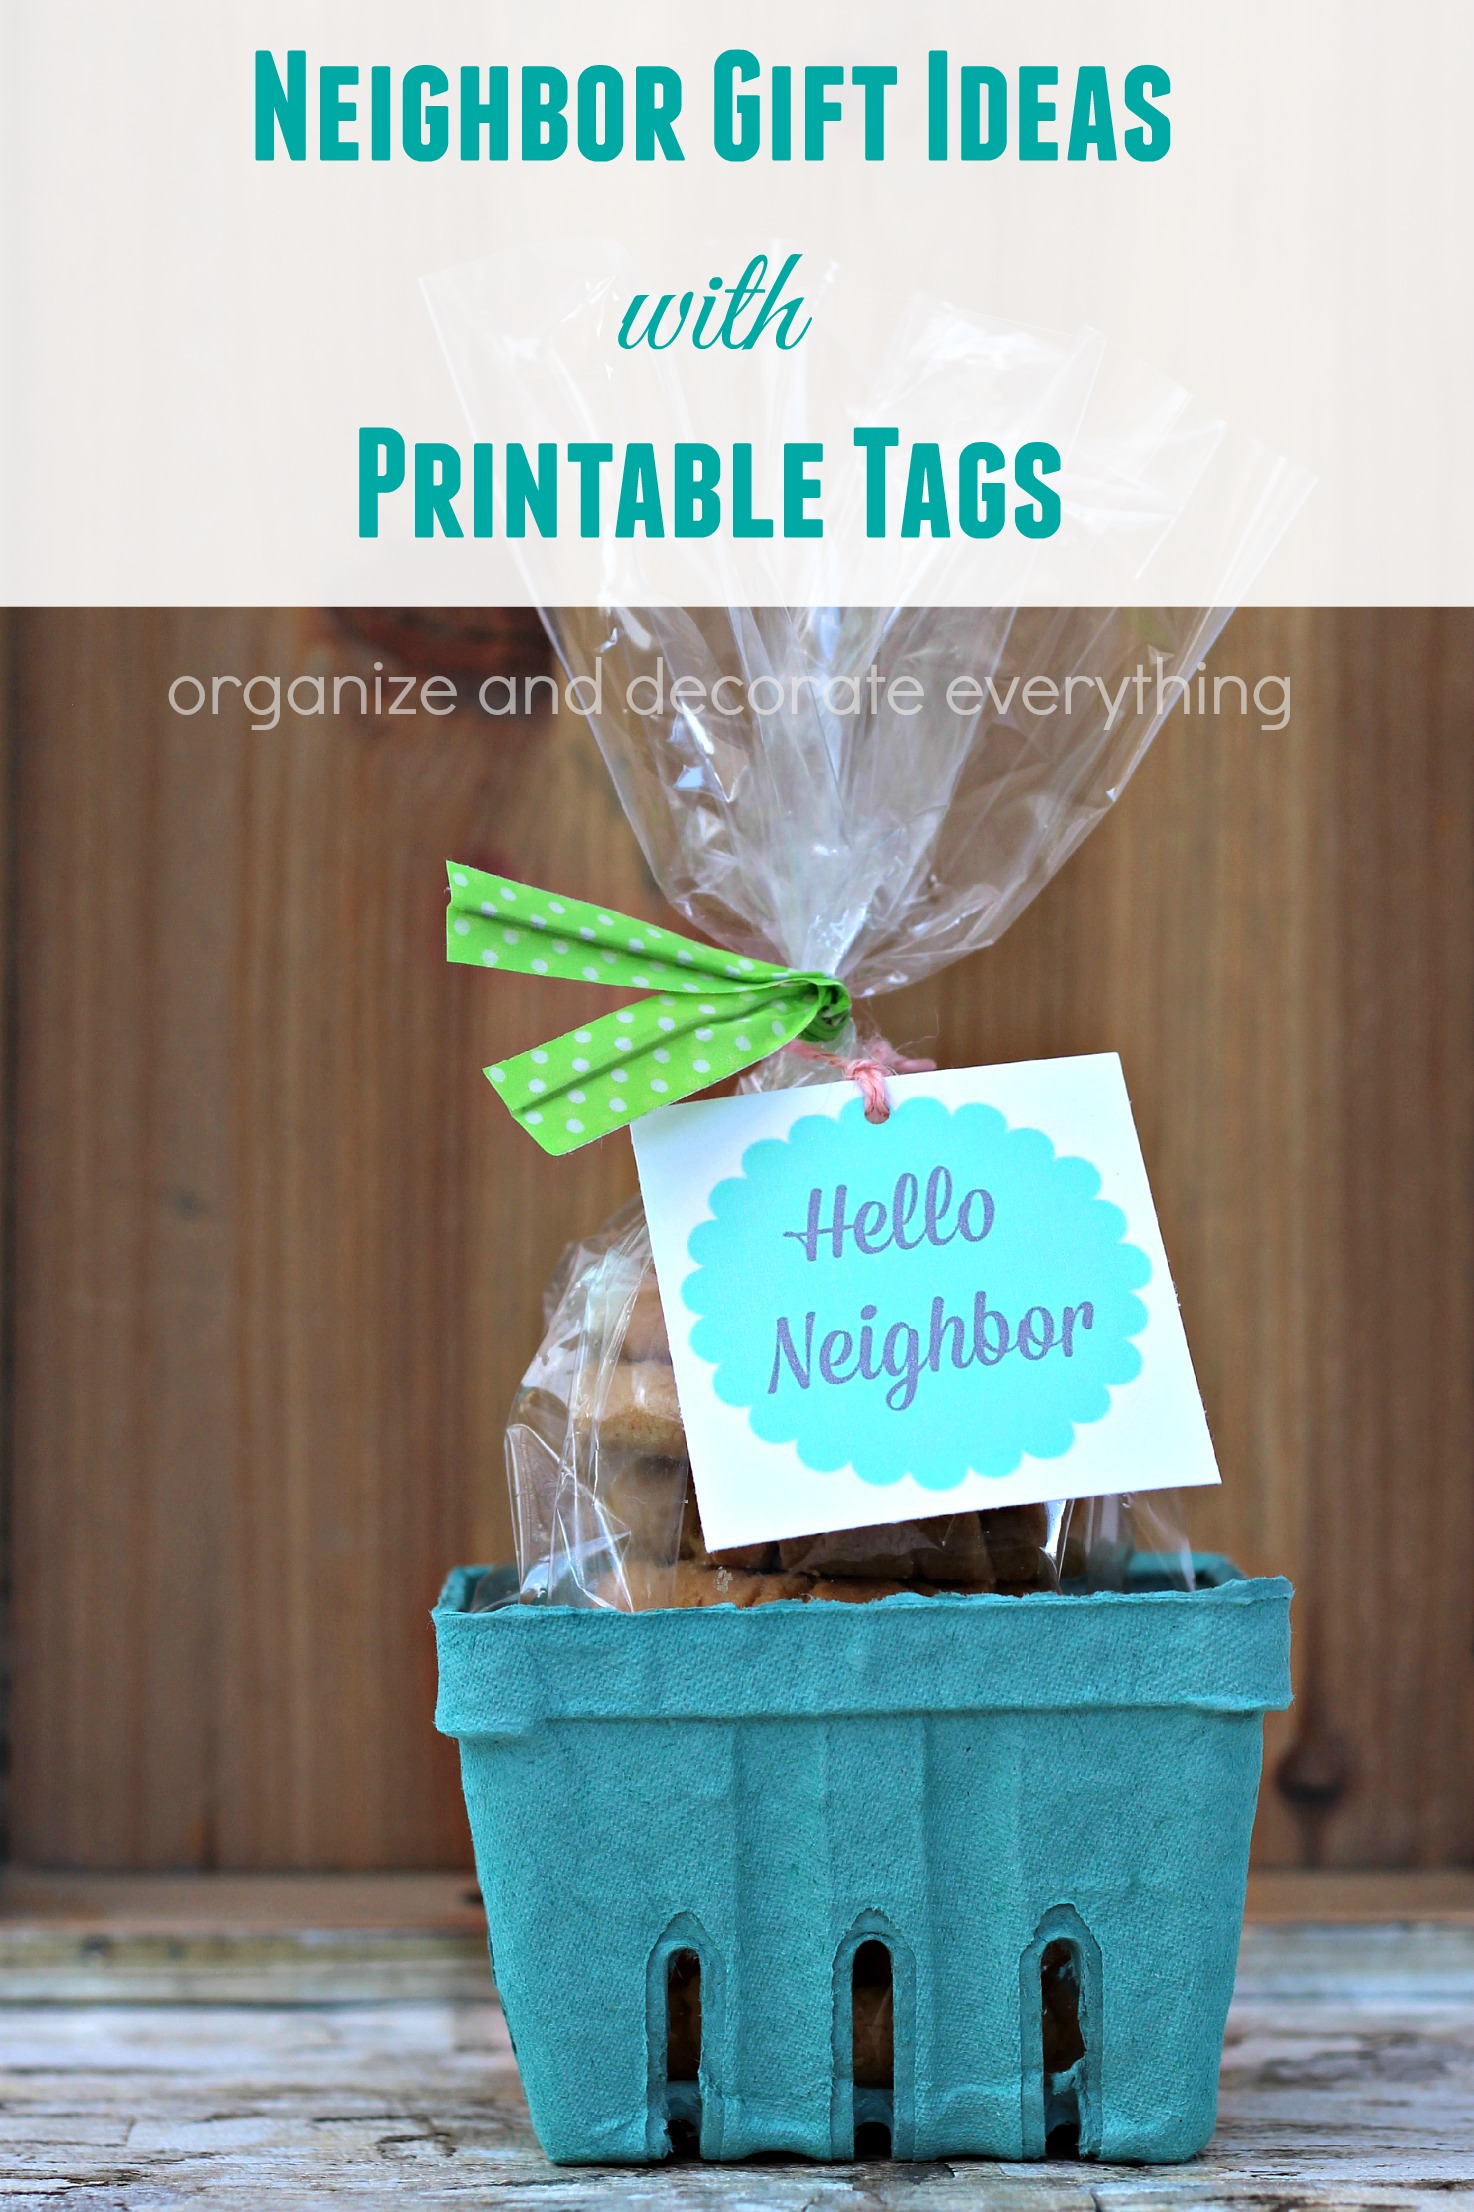 https://organizeyourstuffnow.com/wordpress/wp-content/uploads/2015/04/Neighbor-Gift-Ideas-with-Printable-Tags.jpg